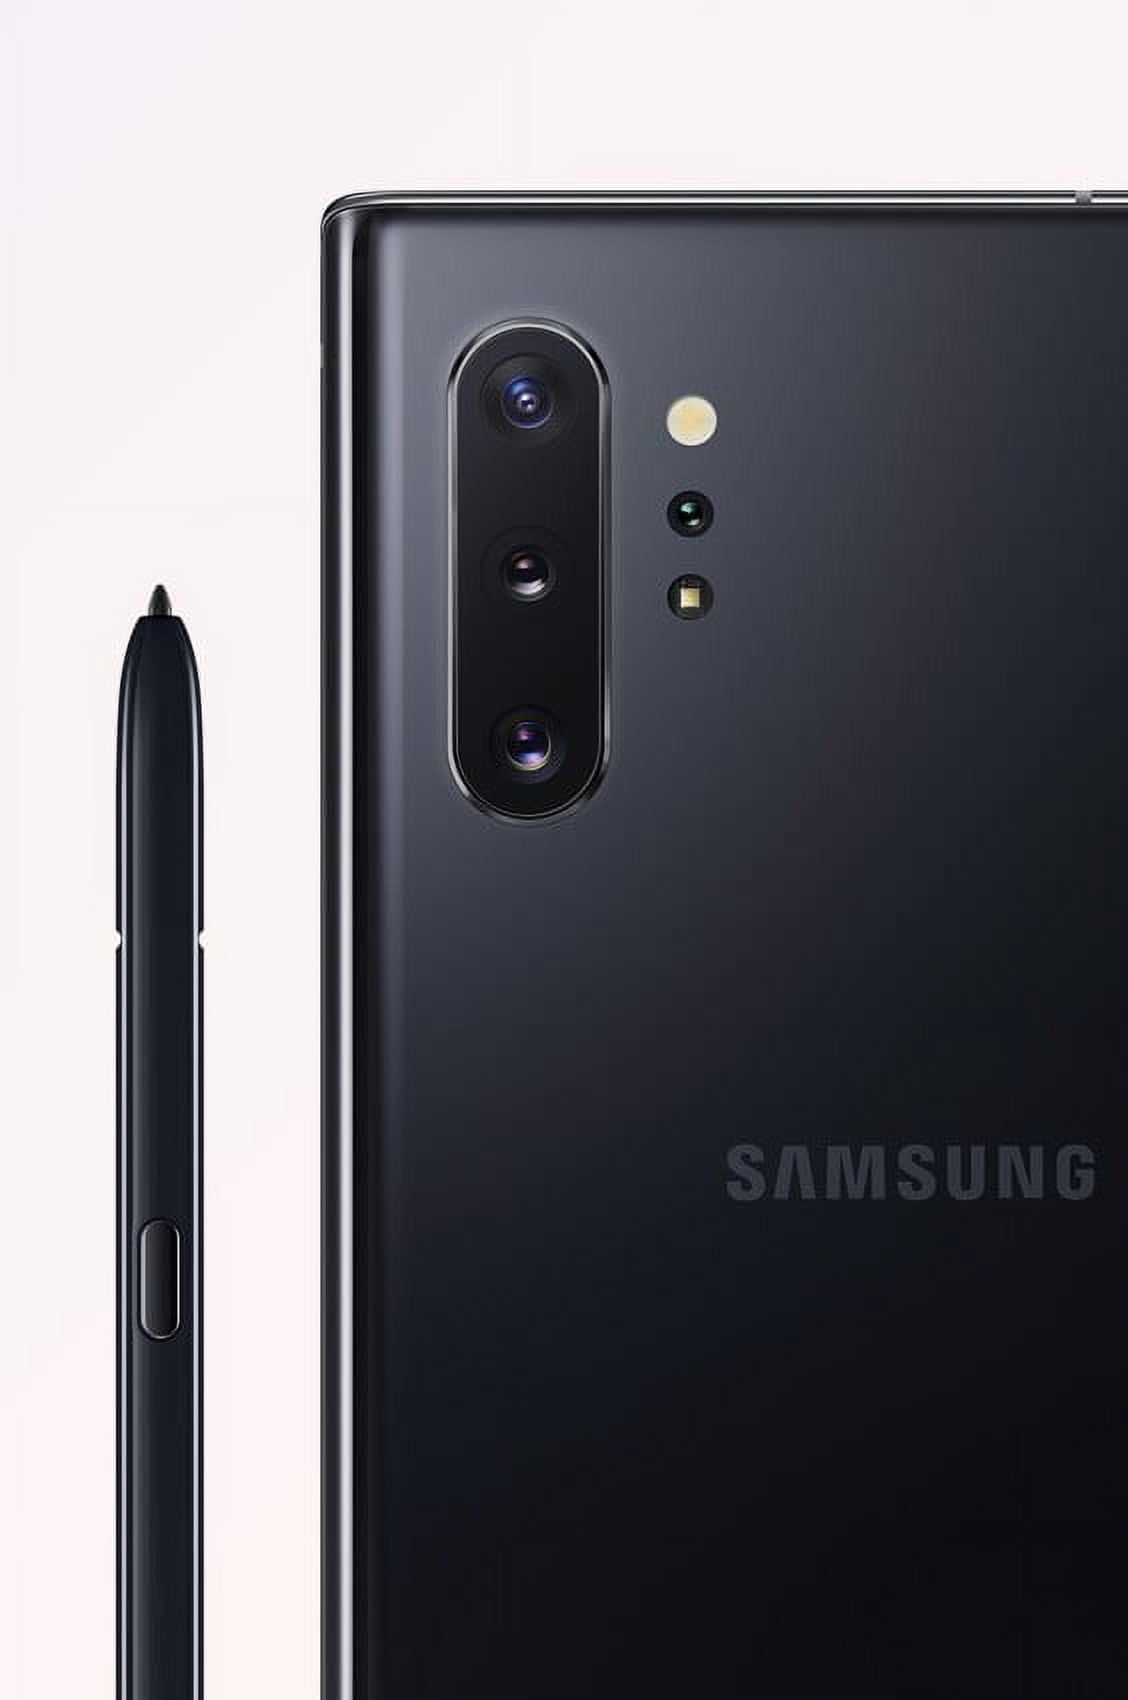 Samsung Galaxy Note 10+ Plus (5G) Single-SIM SM-N976B 256GB Factory  Unlocked 5G Smartphone - International Version (Aura Black)